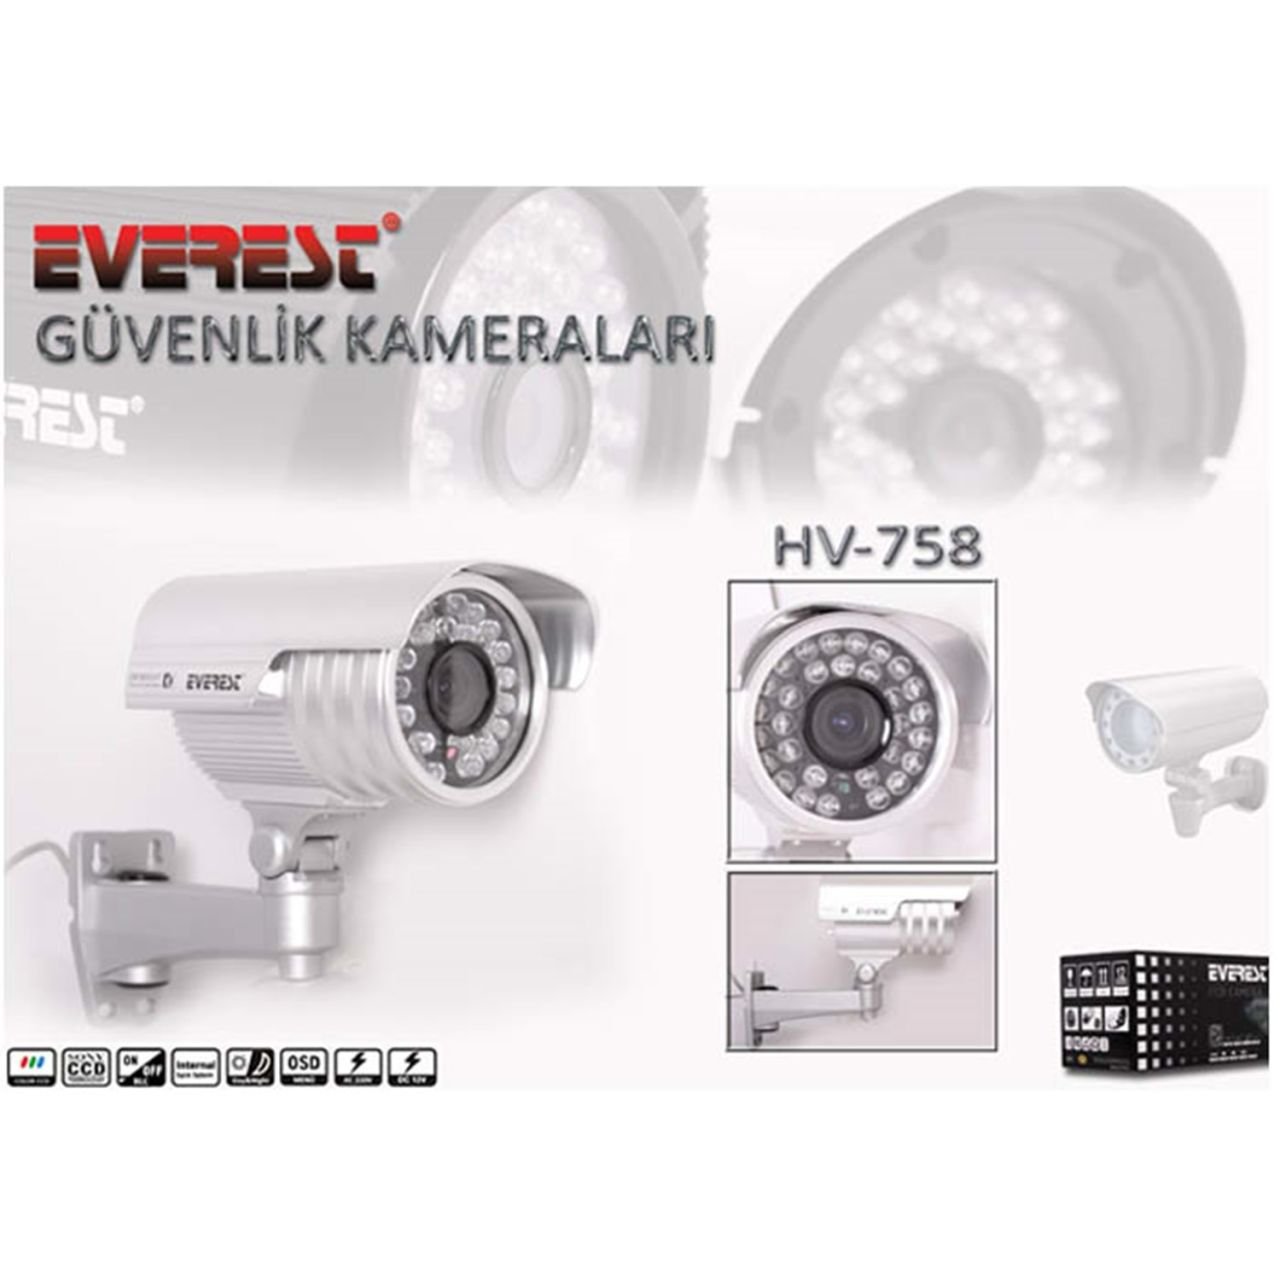 Everest Hv-758 Güvenlik Kamerası CCD Sensörlü Digital Color 48 Ledli Güvenlik Kamerası